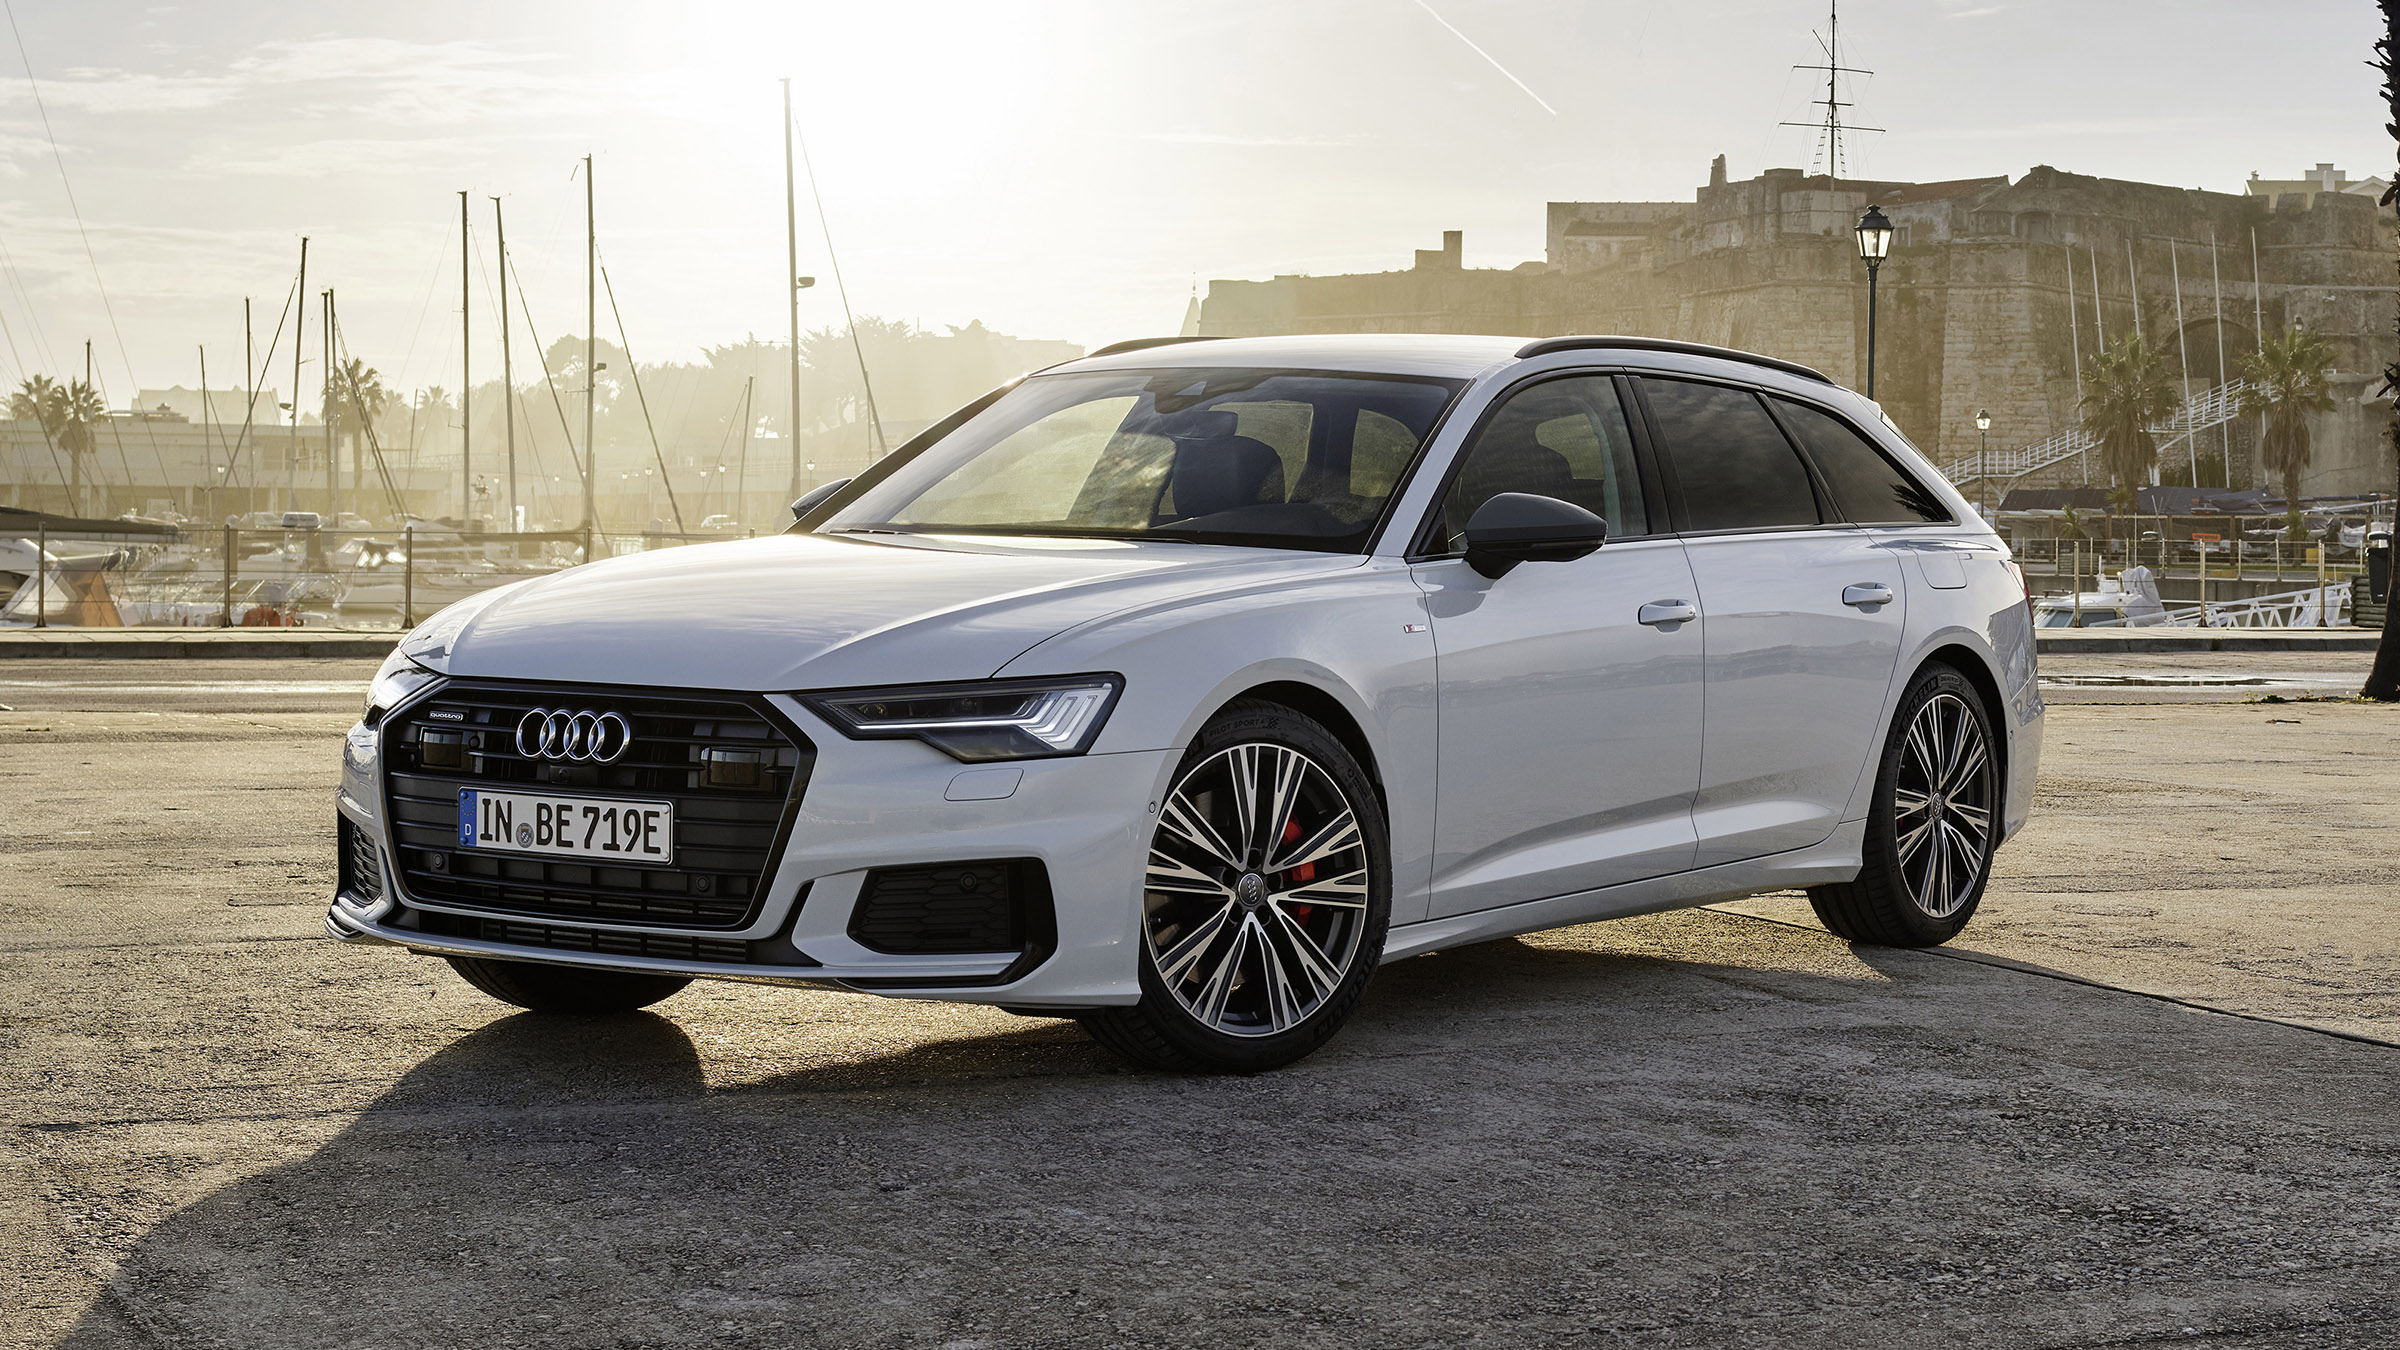 Audi A6 Avant plug-in hybrid due in 2020